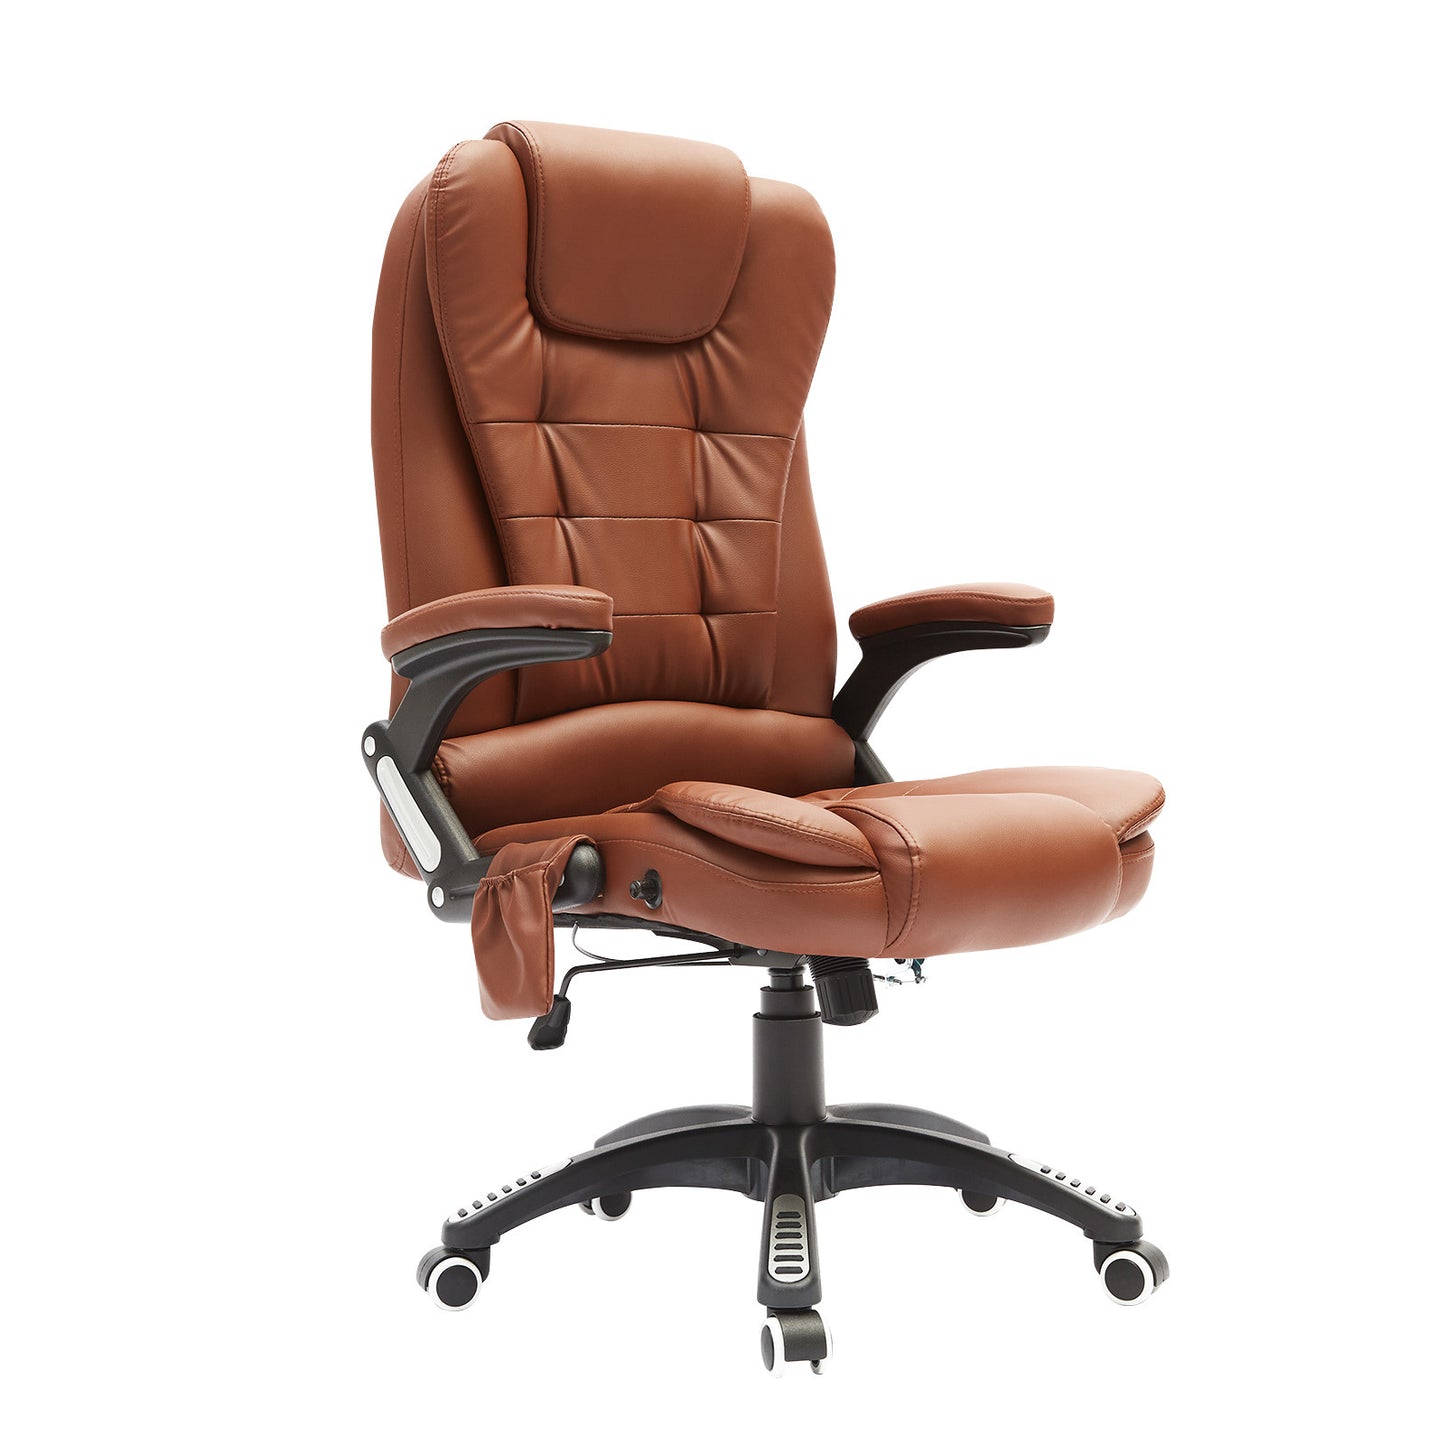 La Bella Massage Office Chair 8 Point Vibration Heated Ergonomic Executive Computer Work Gaming - Espresso